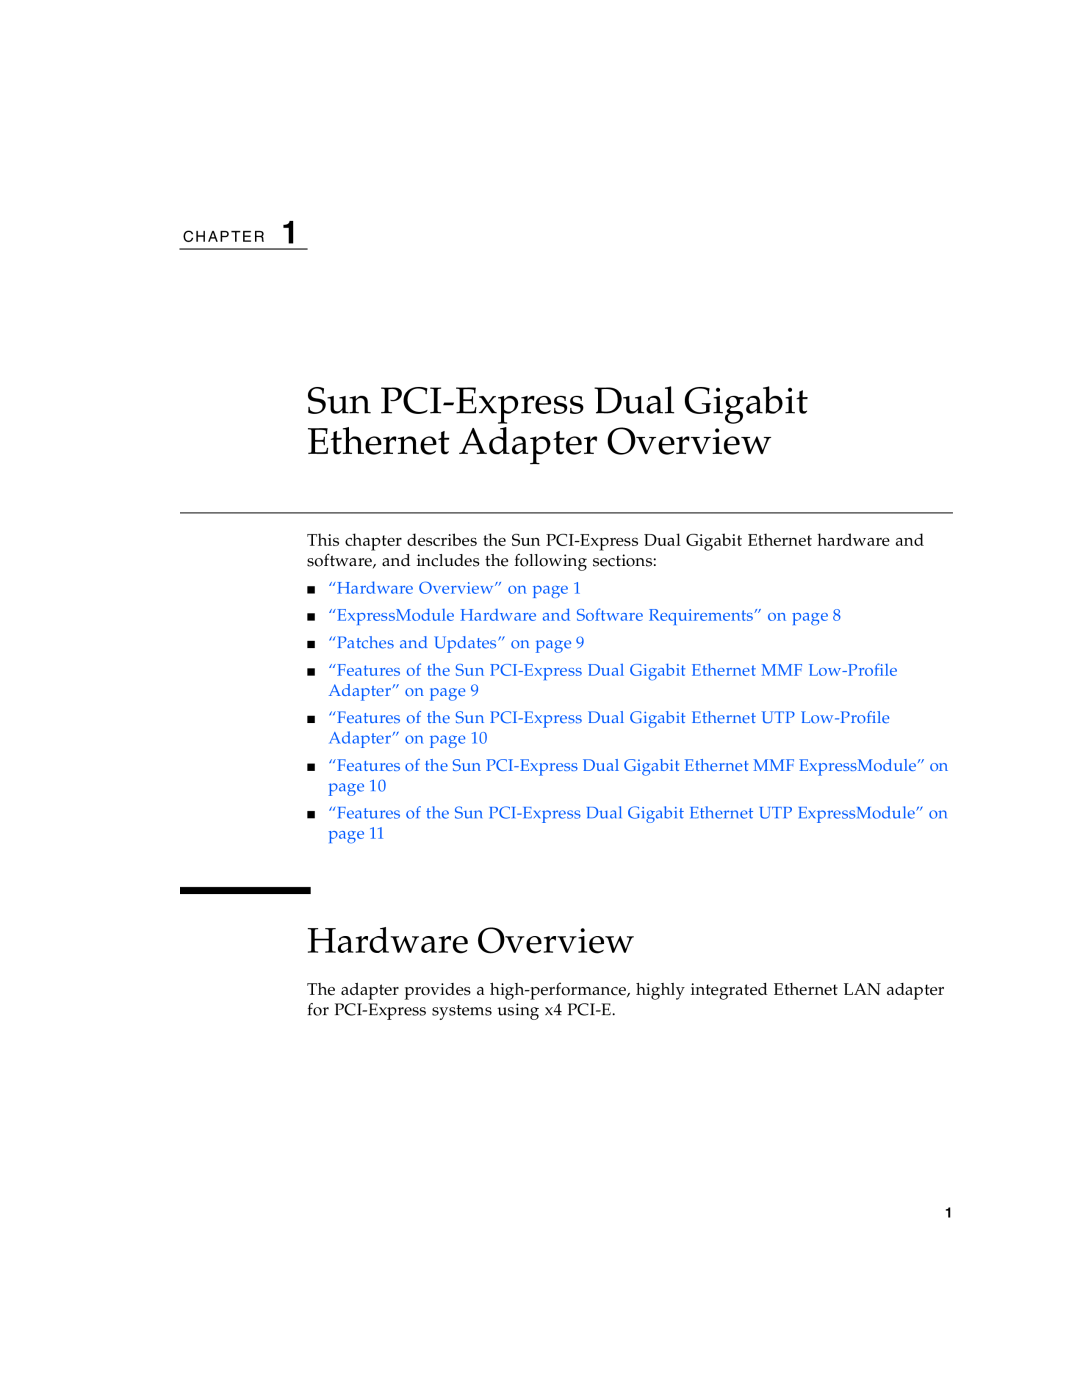 Sun Microsystems Gigabit Ethernet MMF/UTP Adapter manual Sun PCI-Express Dual Gigabit Ethernet Adapter Overview 